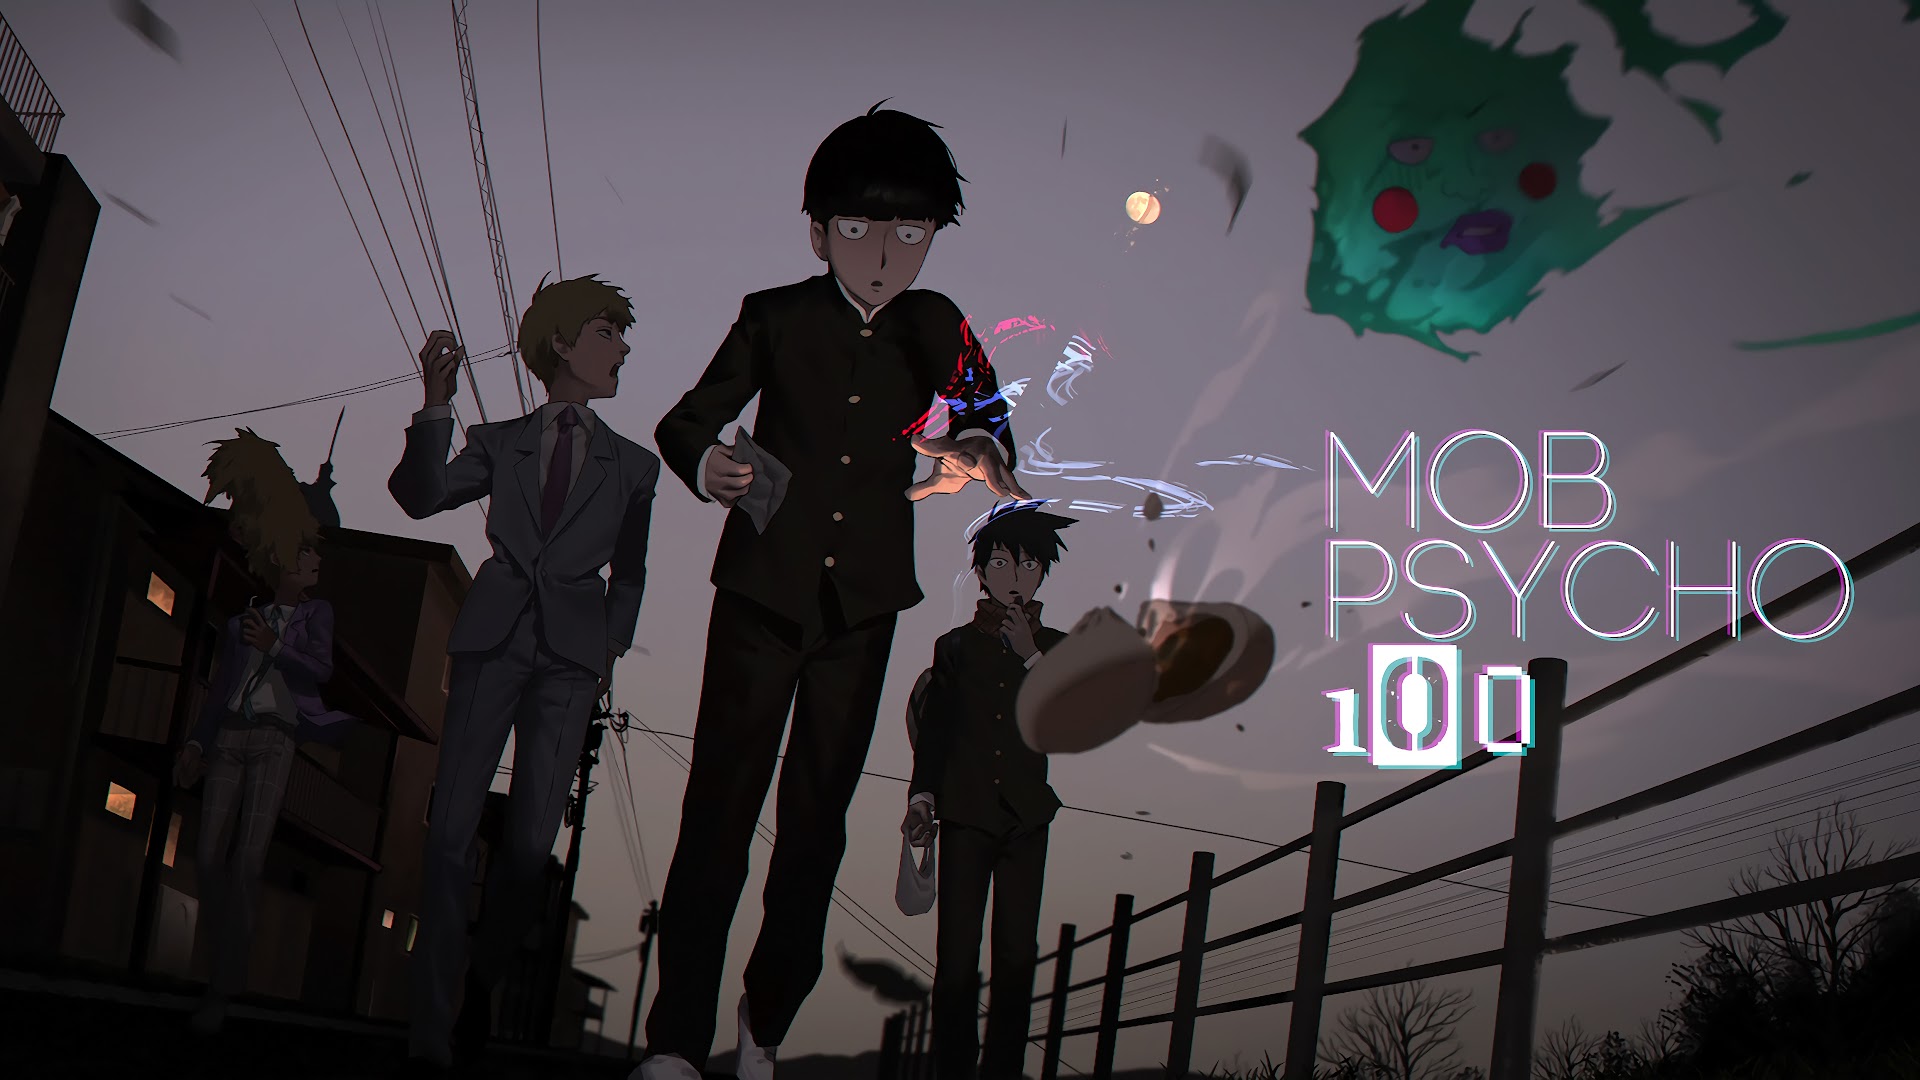 Mob Psycho 100 Anime Characters 4k Wallpaper 16